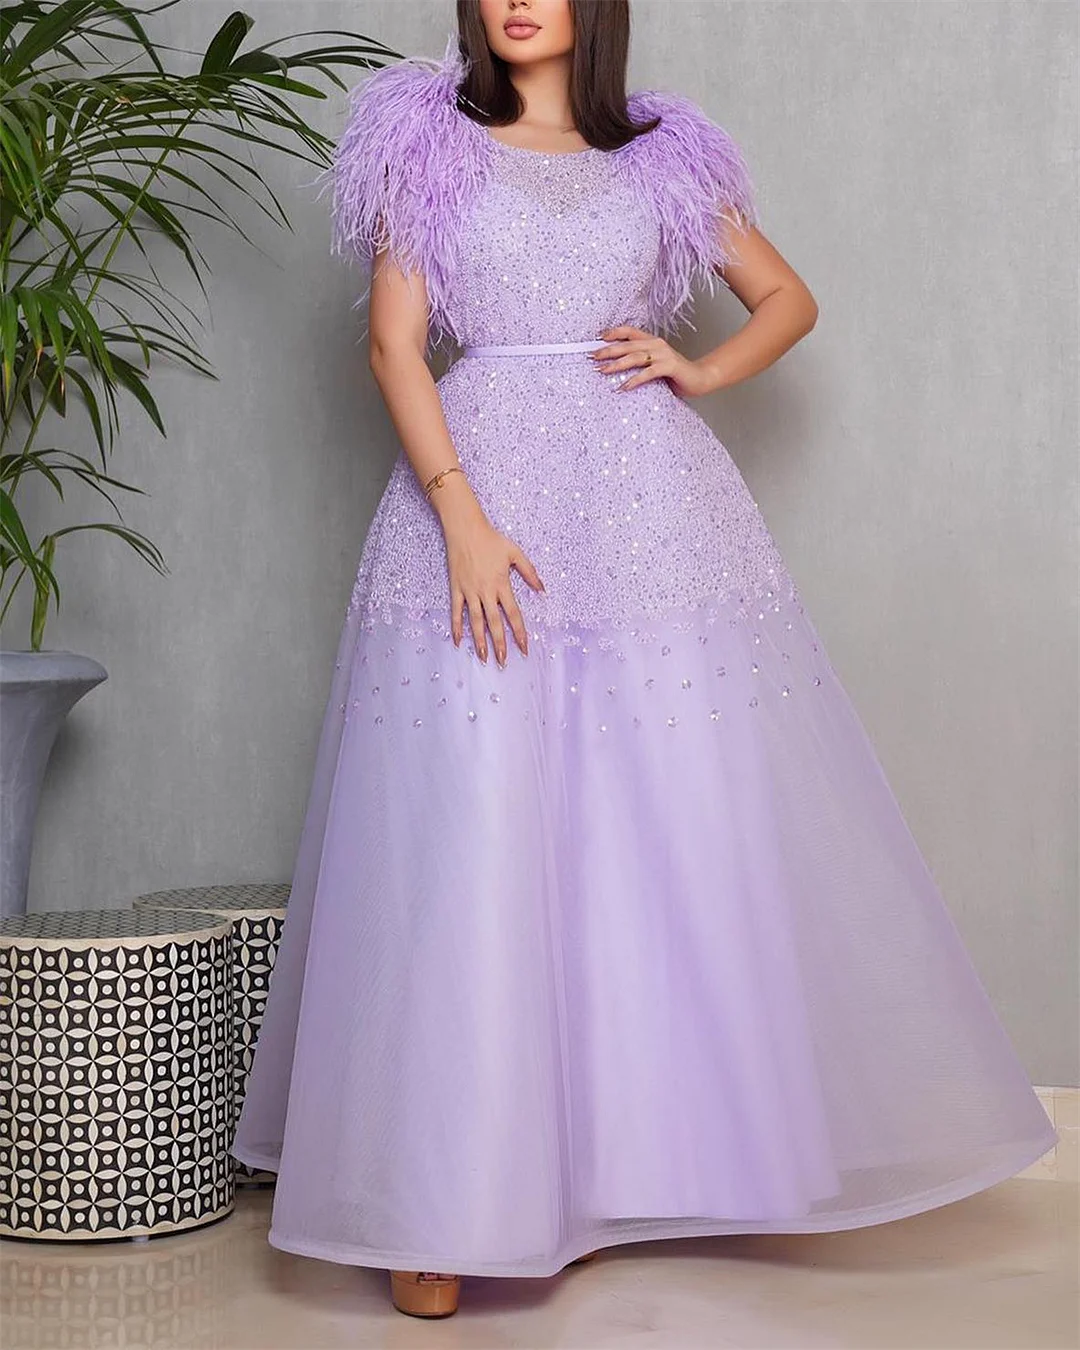 Women's Purple Sequined Mesh Dress